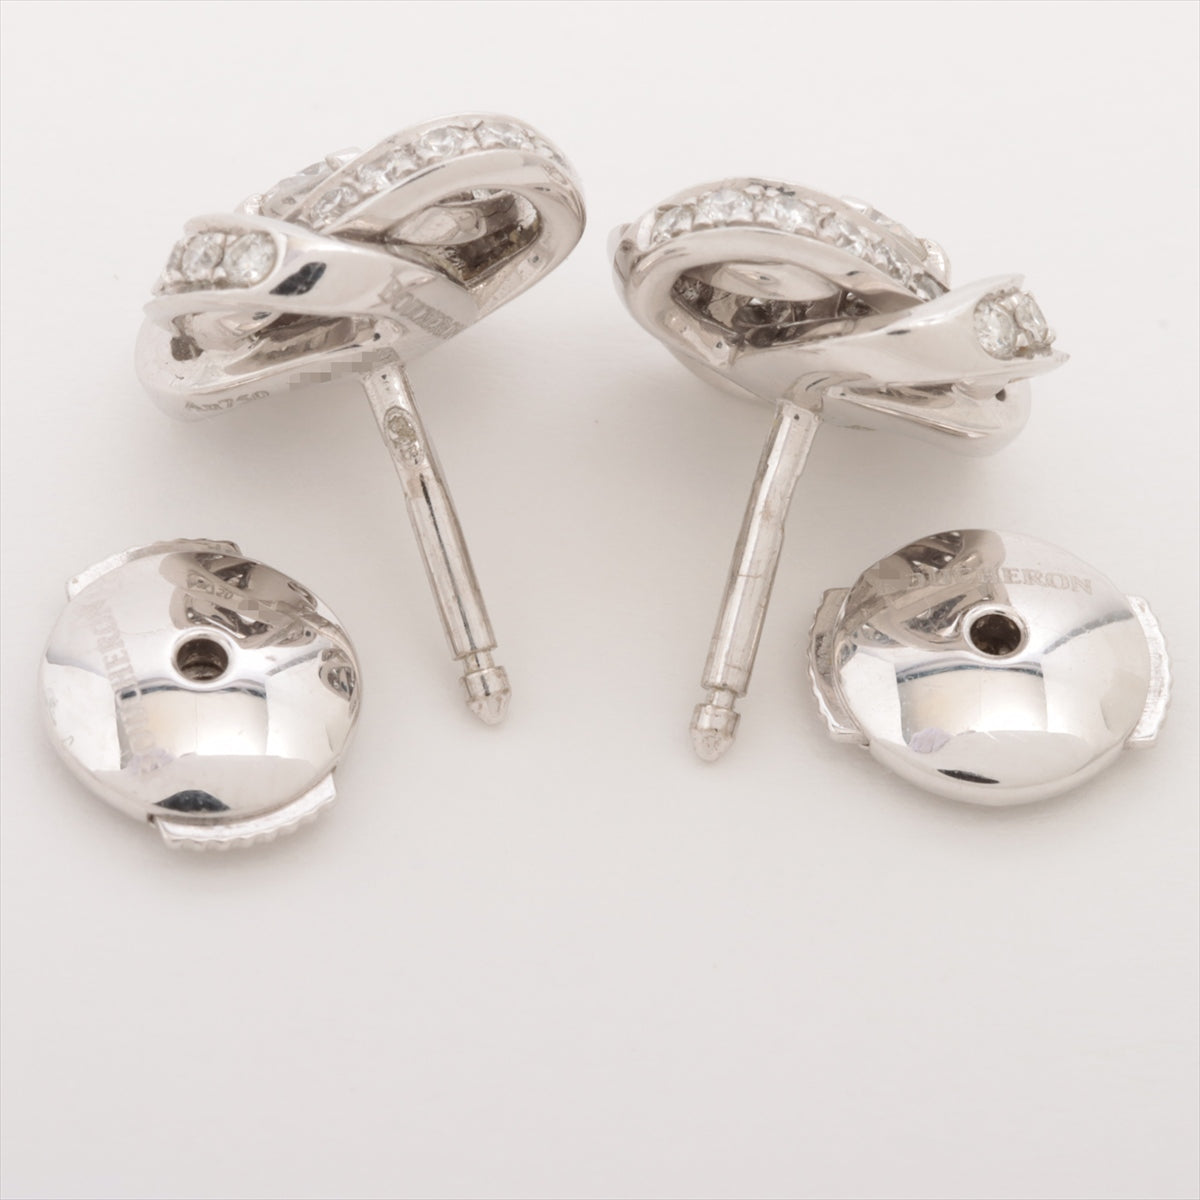 Boucheron Ava Pivoine diamond Piercing jewelry 750(WG) 4.7g Diamond diameter about 3.30mm